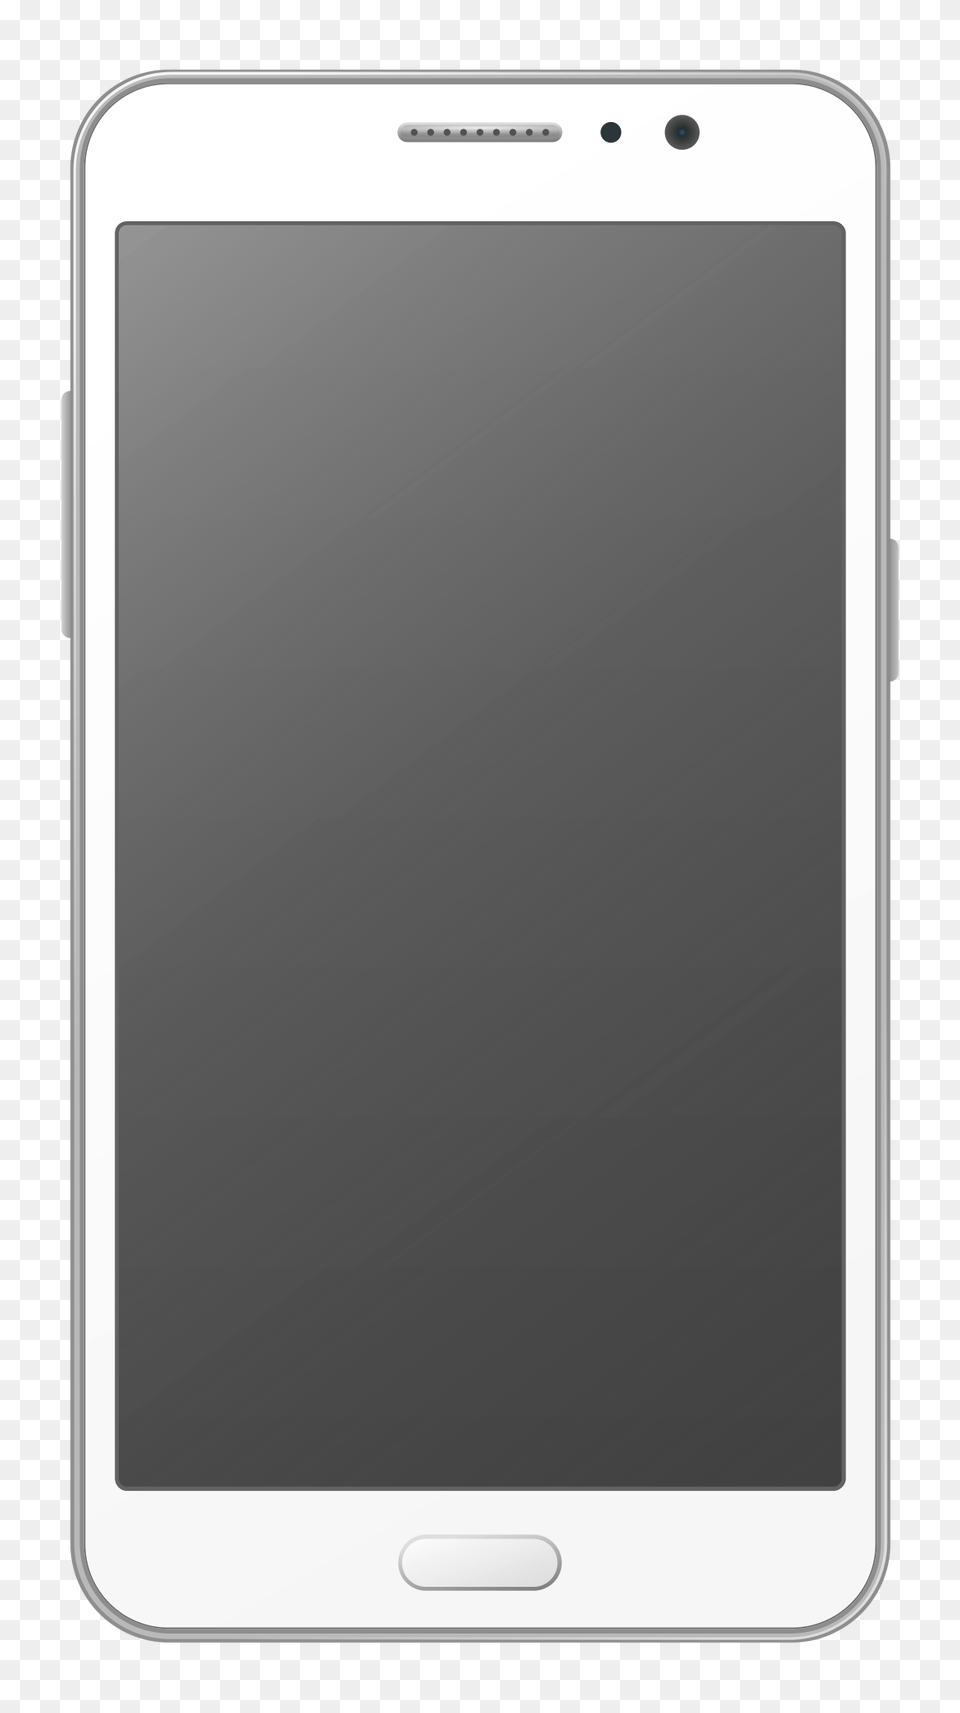 Pngpix Com Smartphone Vector Transparent Image, Electronics, Mobile Phone, Phone, Iphone Png